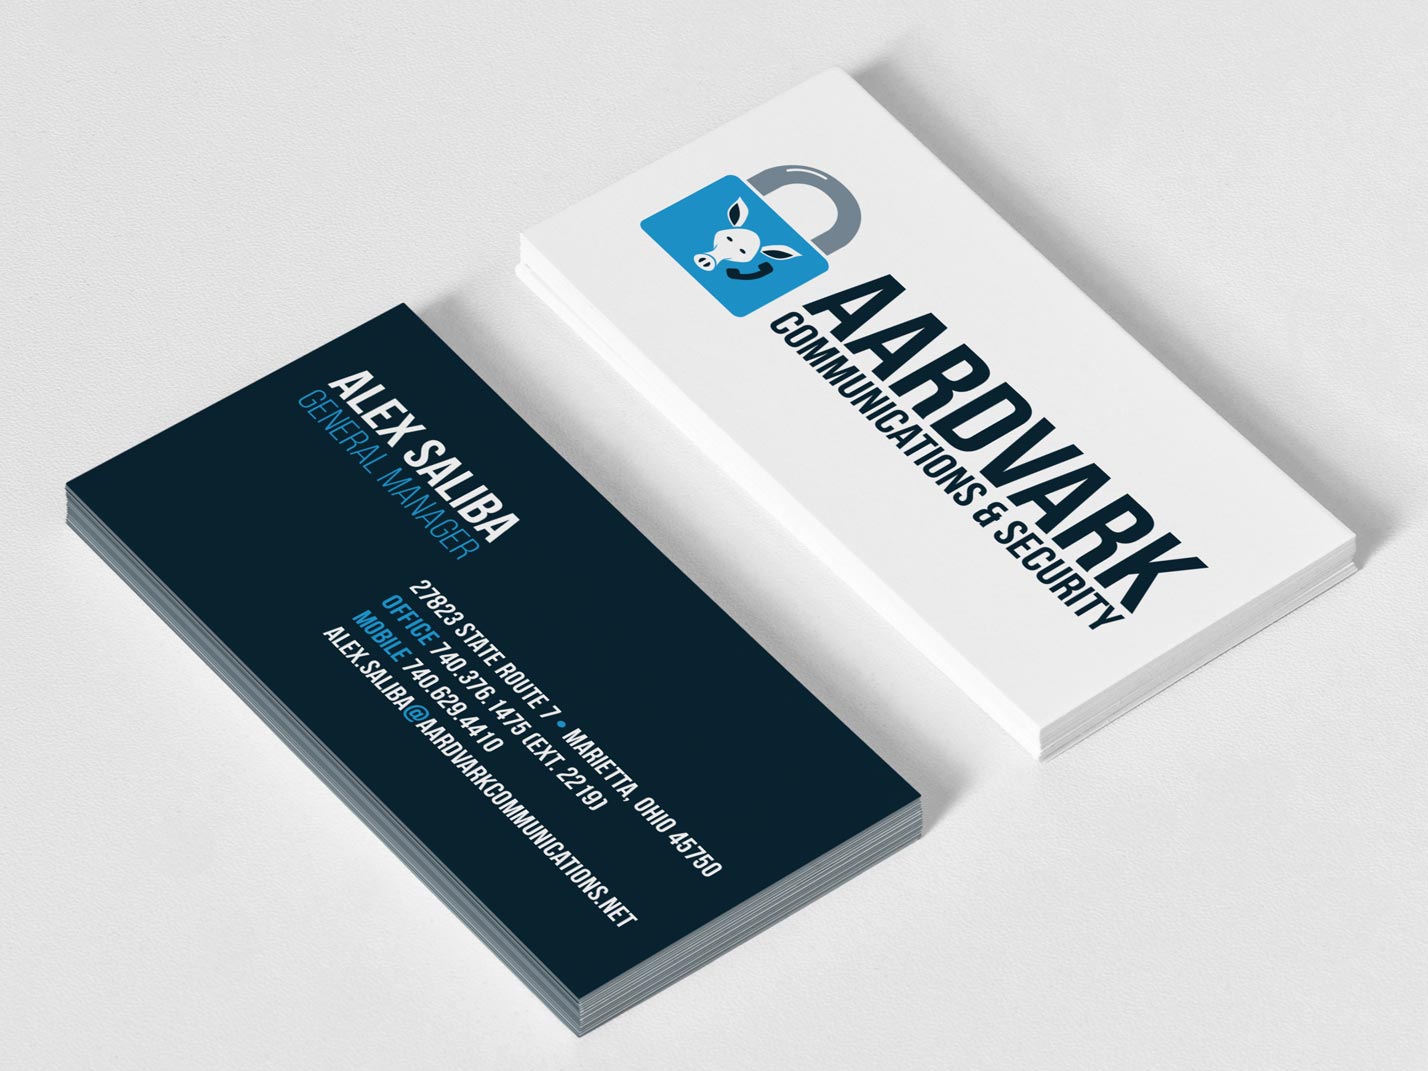 Aardvark Communications & Security Branding